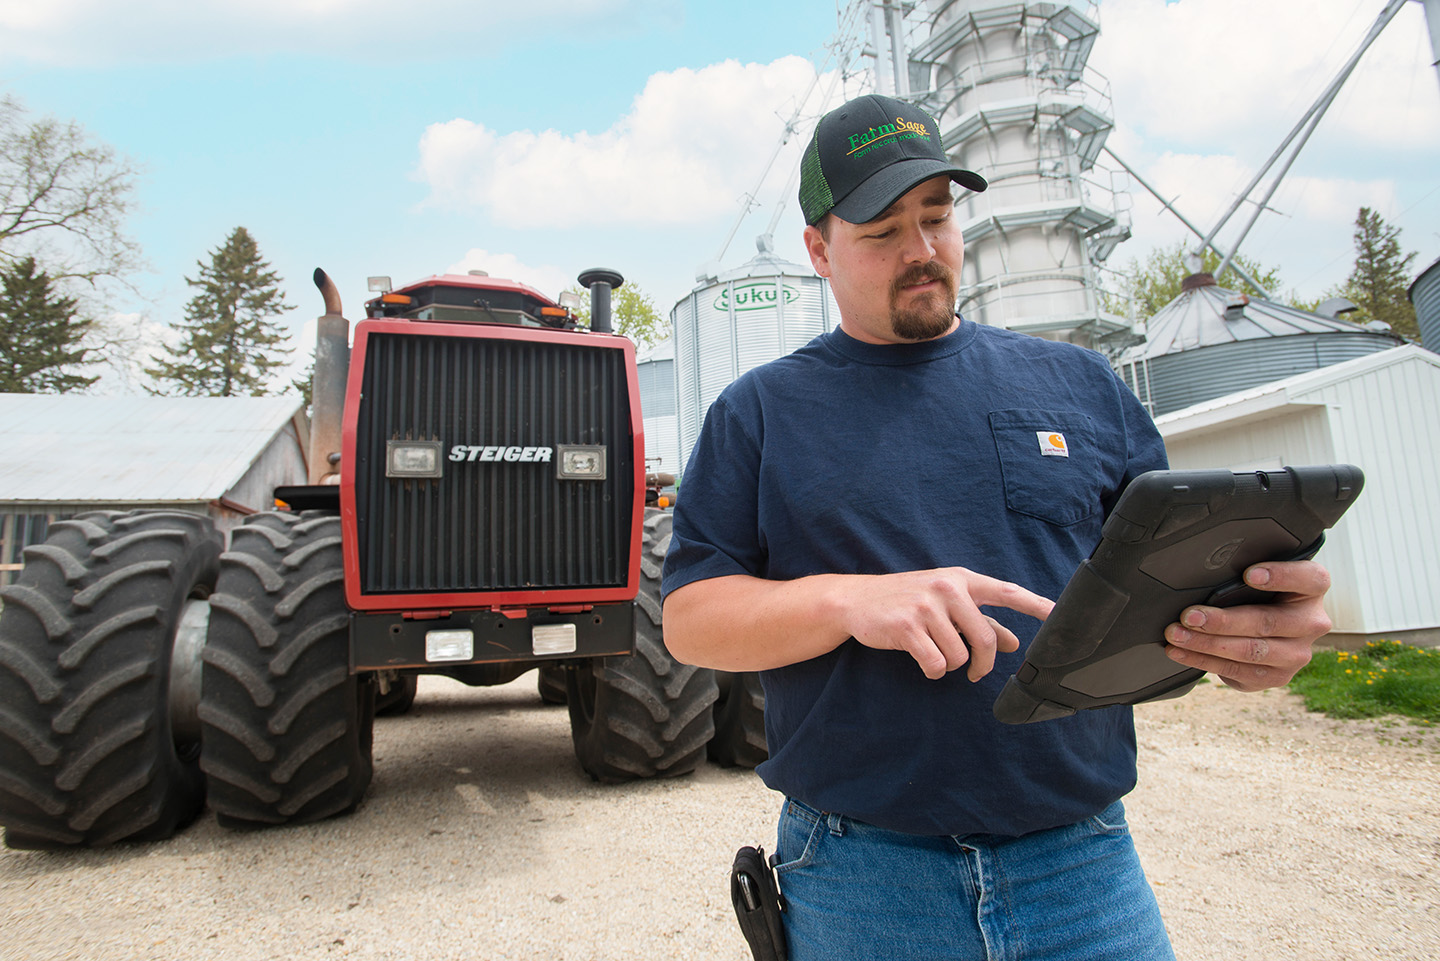 Iowa soybean farmers completing survey on his iPad